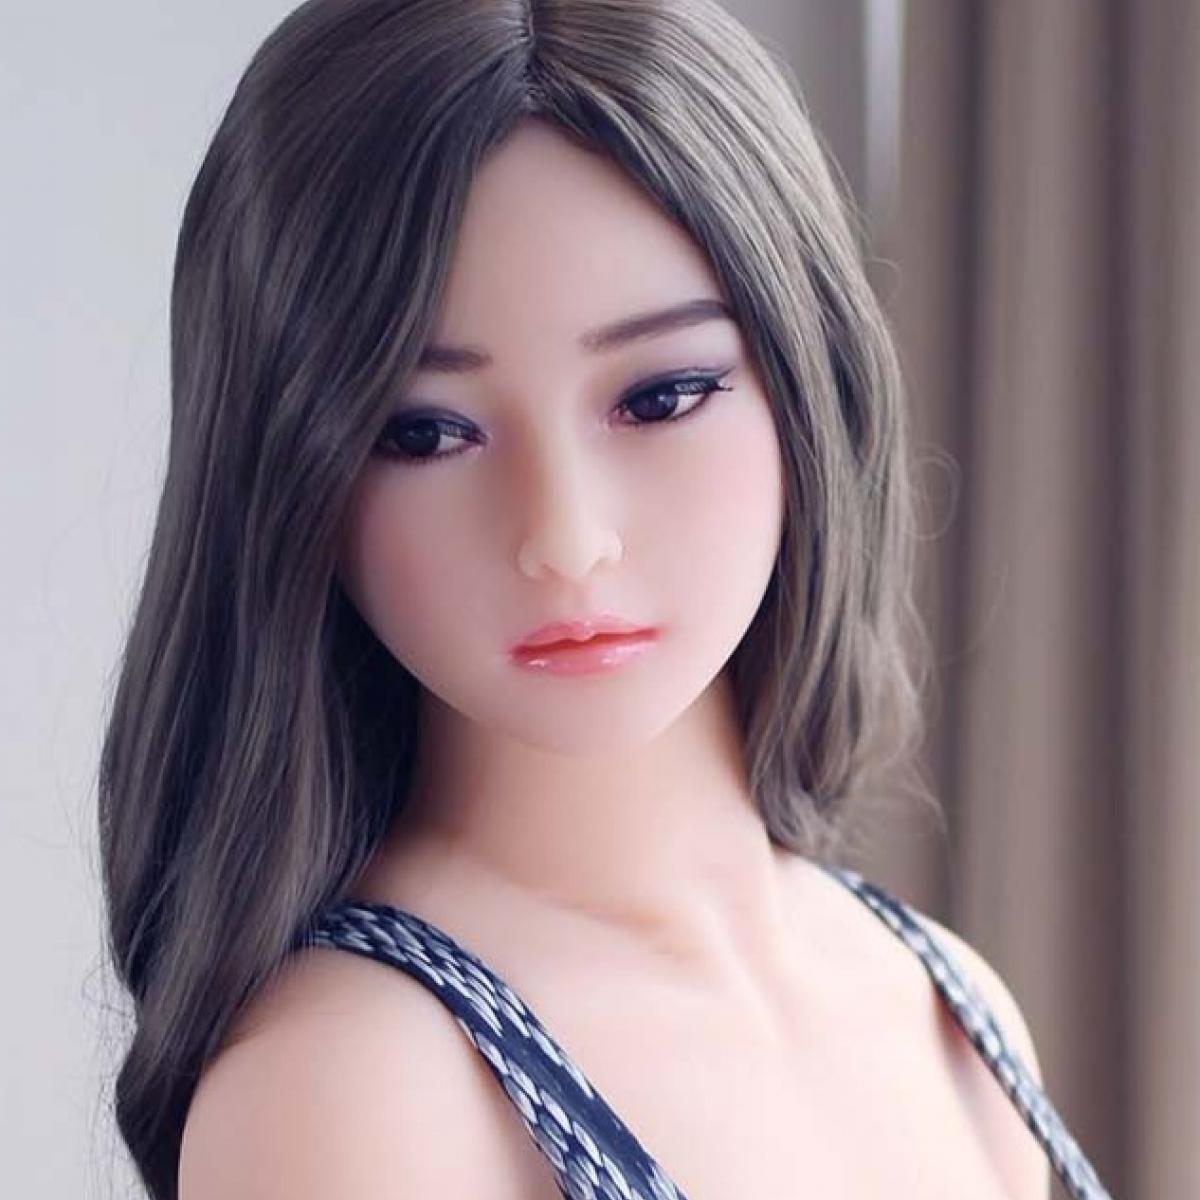 Neodoll Sugar Babe - 52 - Sex Doll Head - M16 Compatible - Natural